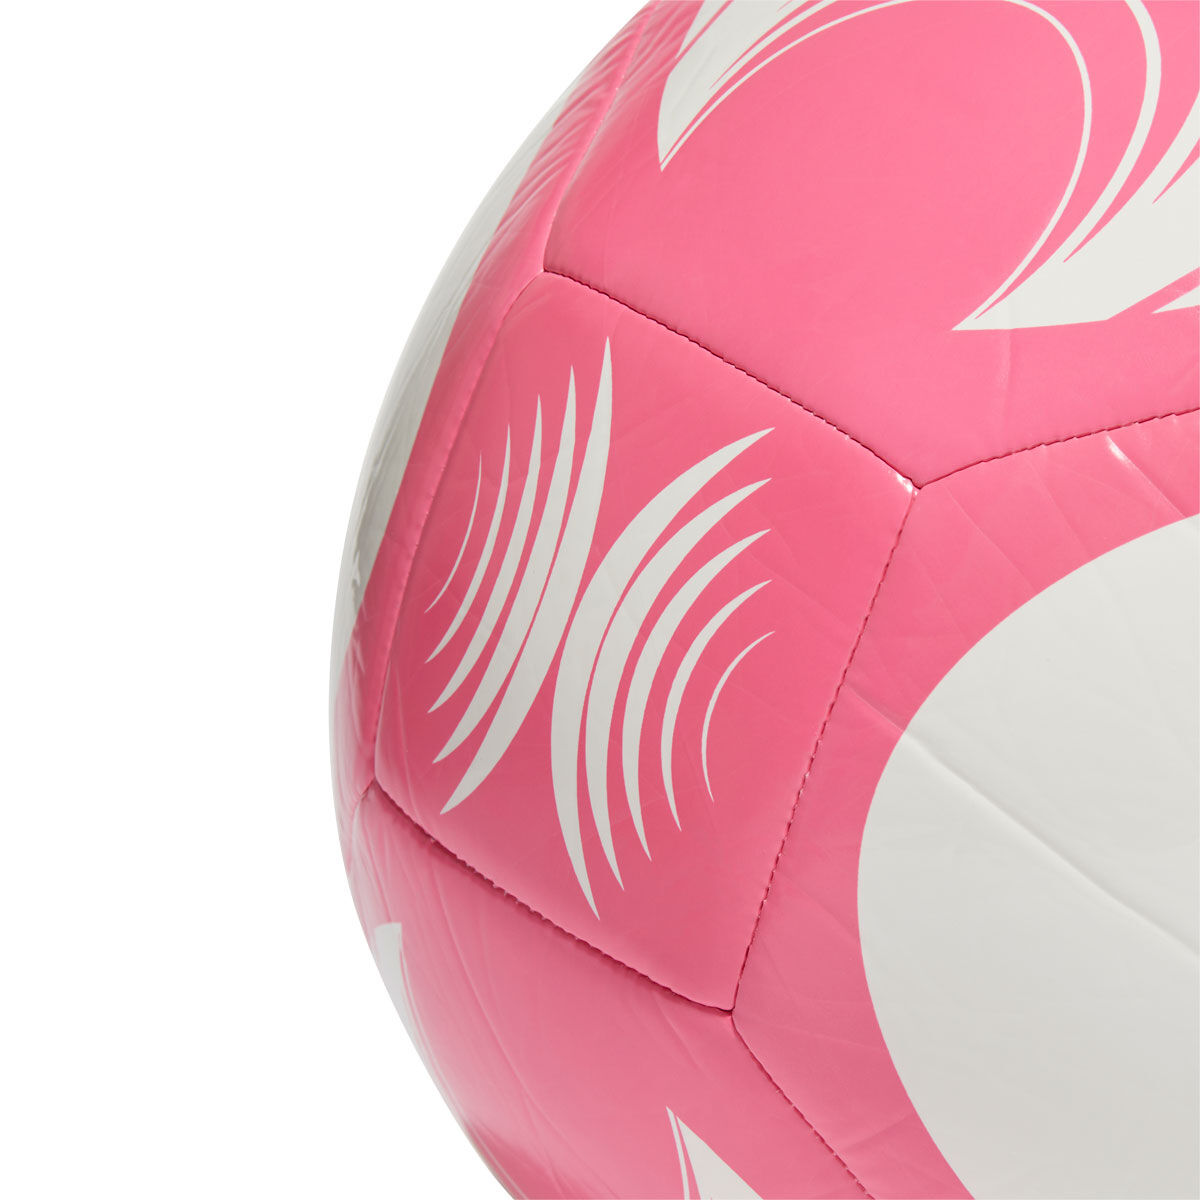 adidas soccer ball pink